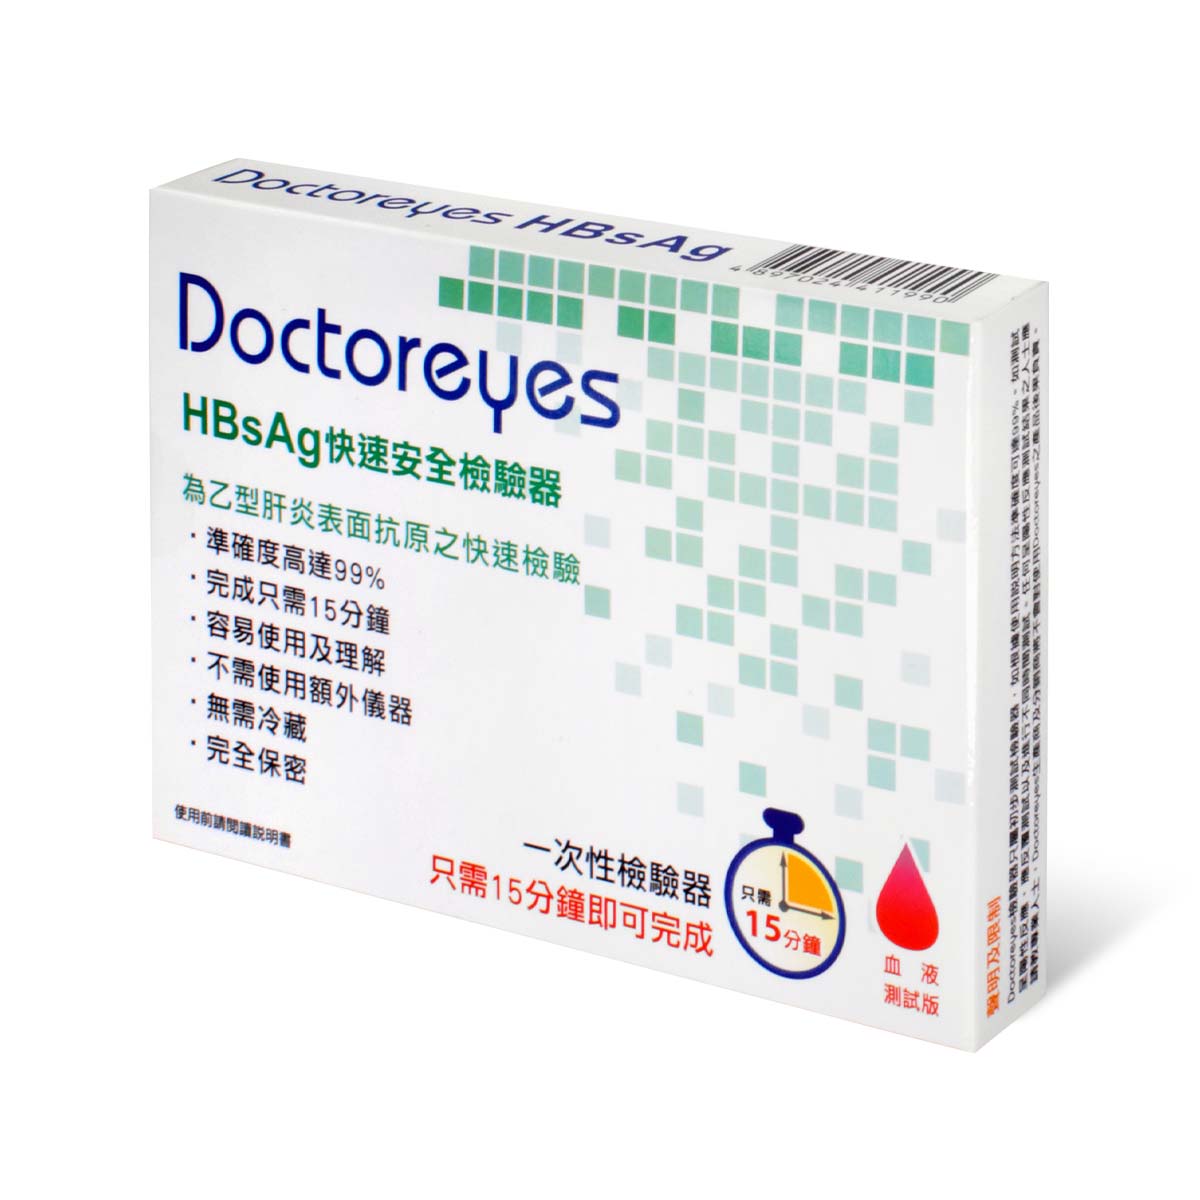 Doctoreyes 乙型肝炎 (HBsAg) 快速检验器-p_1